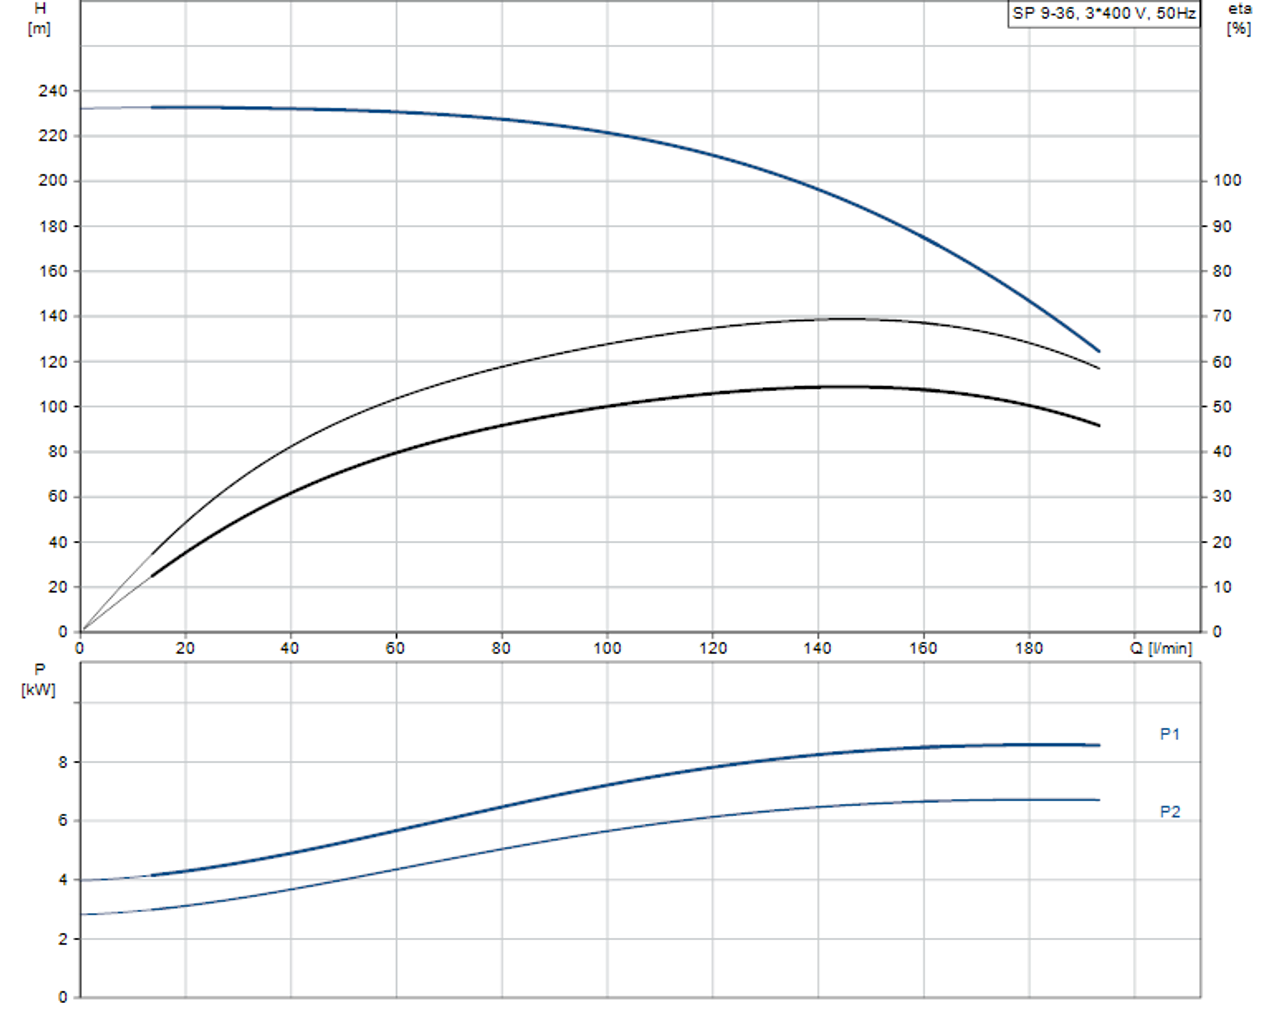 SP 9-36 415v Performance Curve